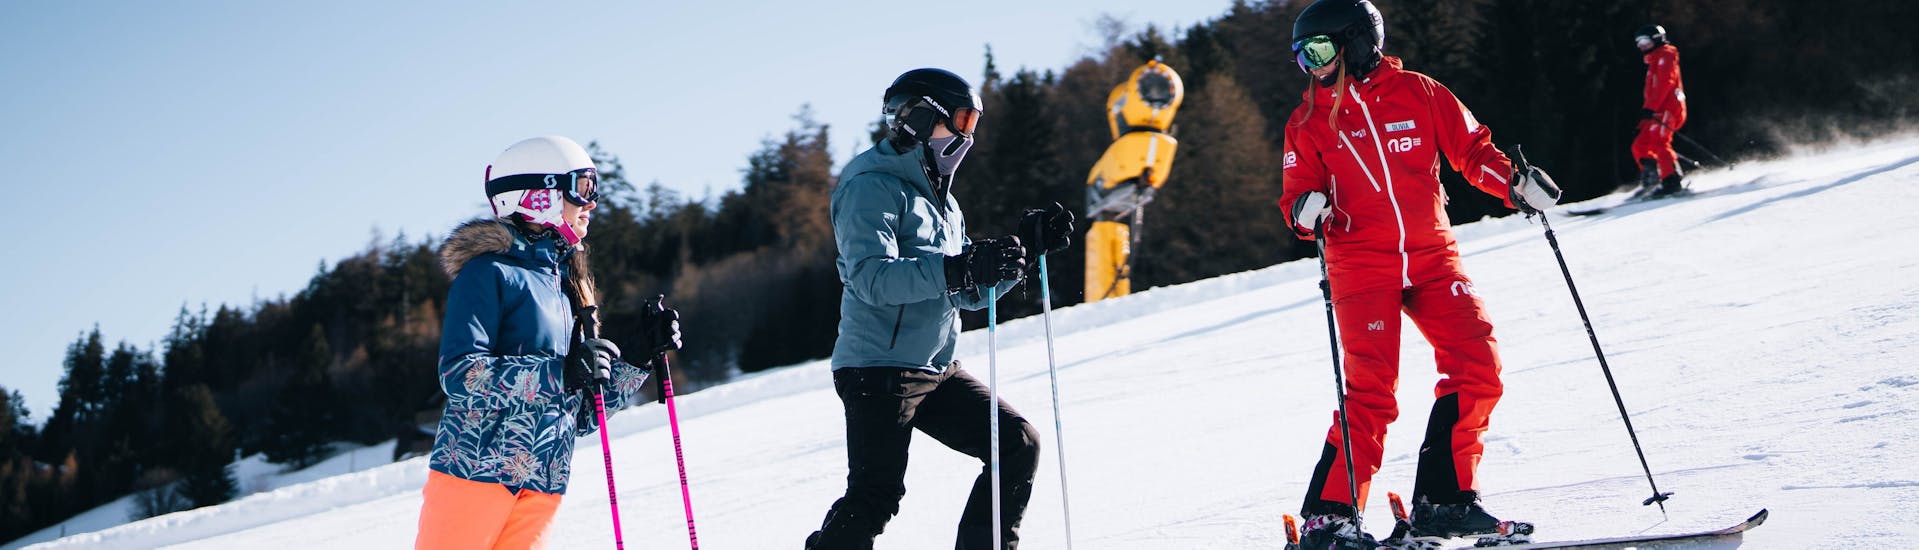 Lezioni di sci per adulti per tutti i livelli.